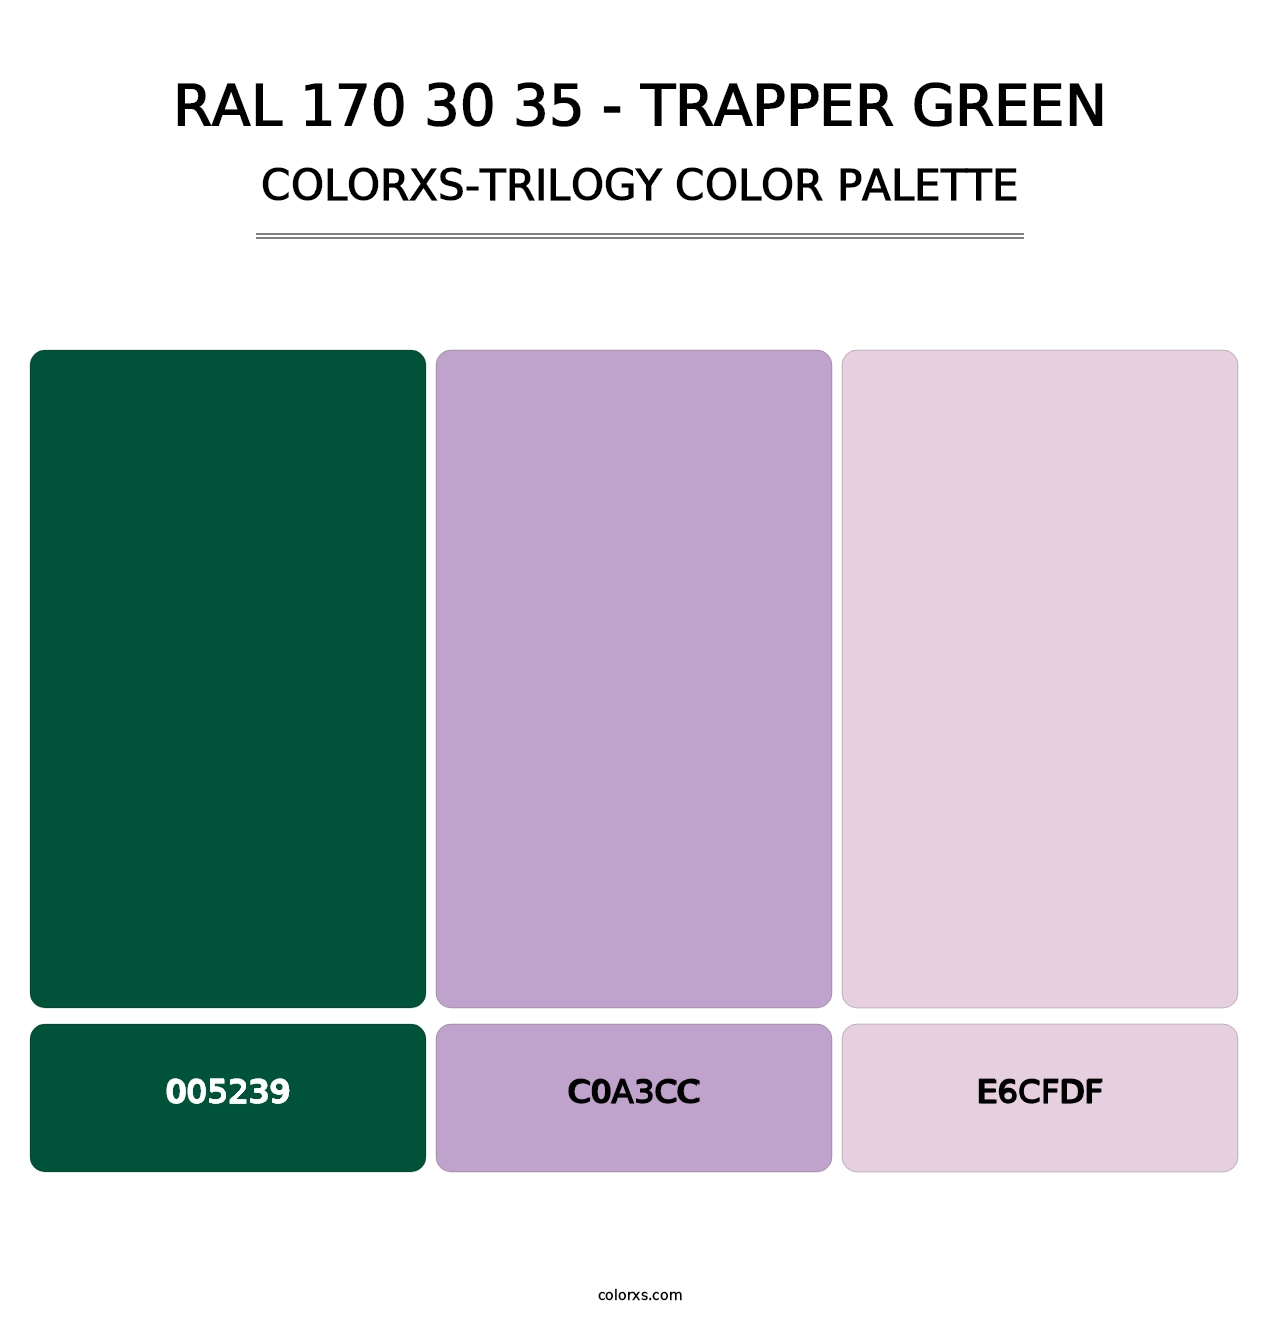 RAL 170 30 35 - Trapper Green - Colorxs Trilogy Palette